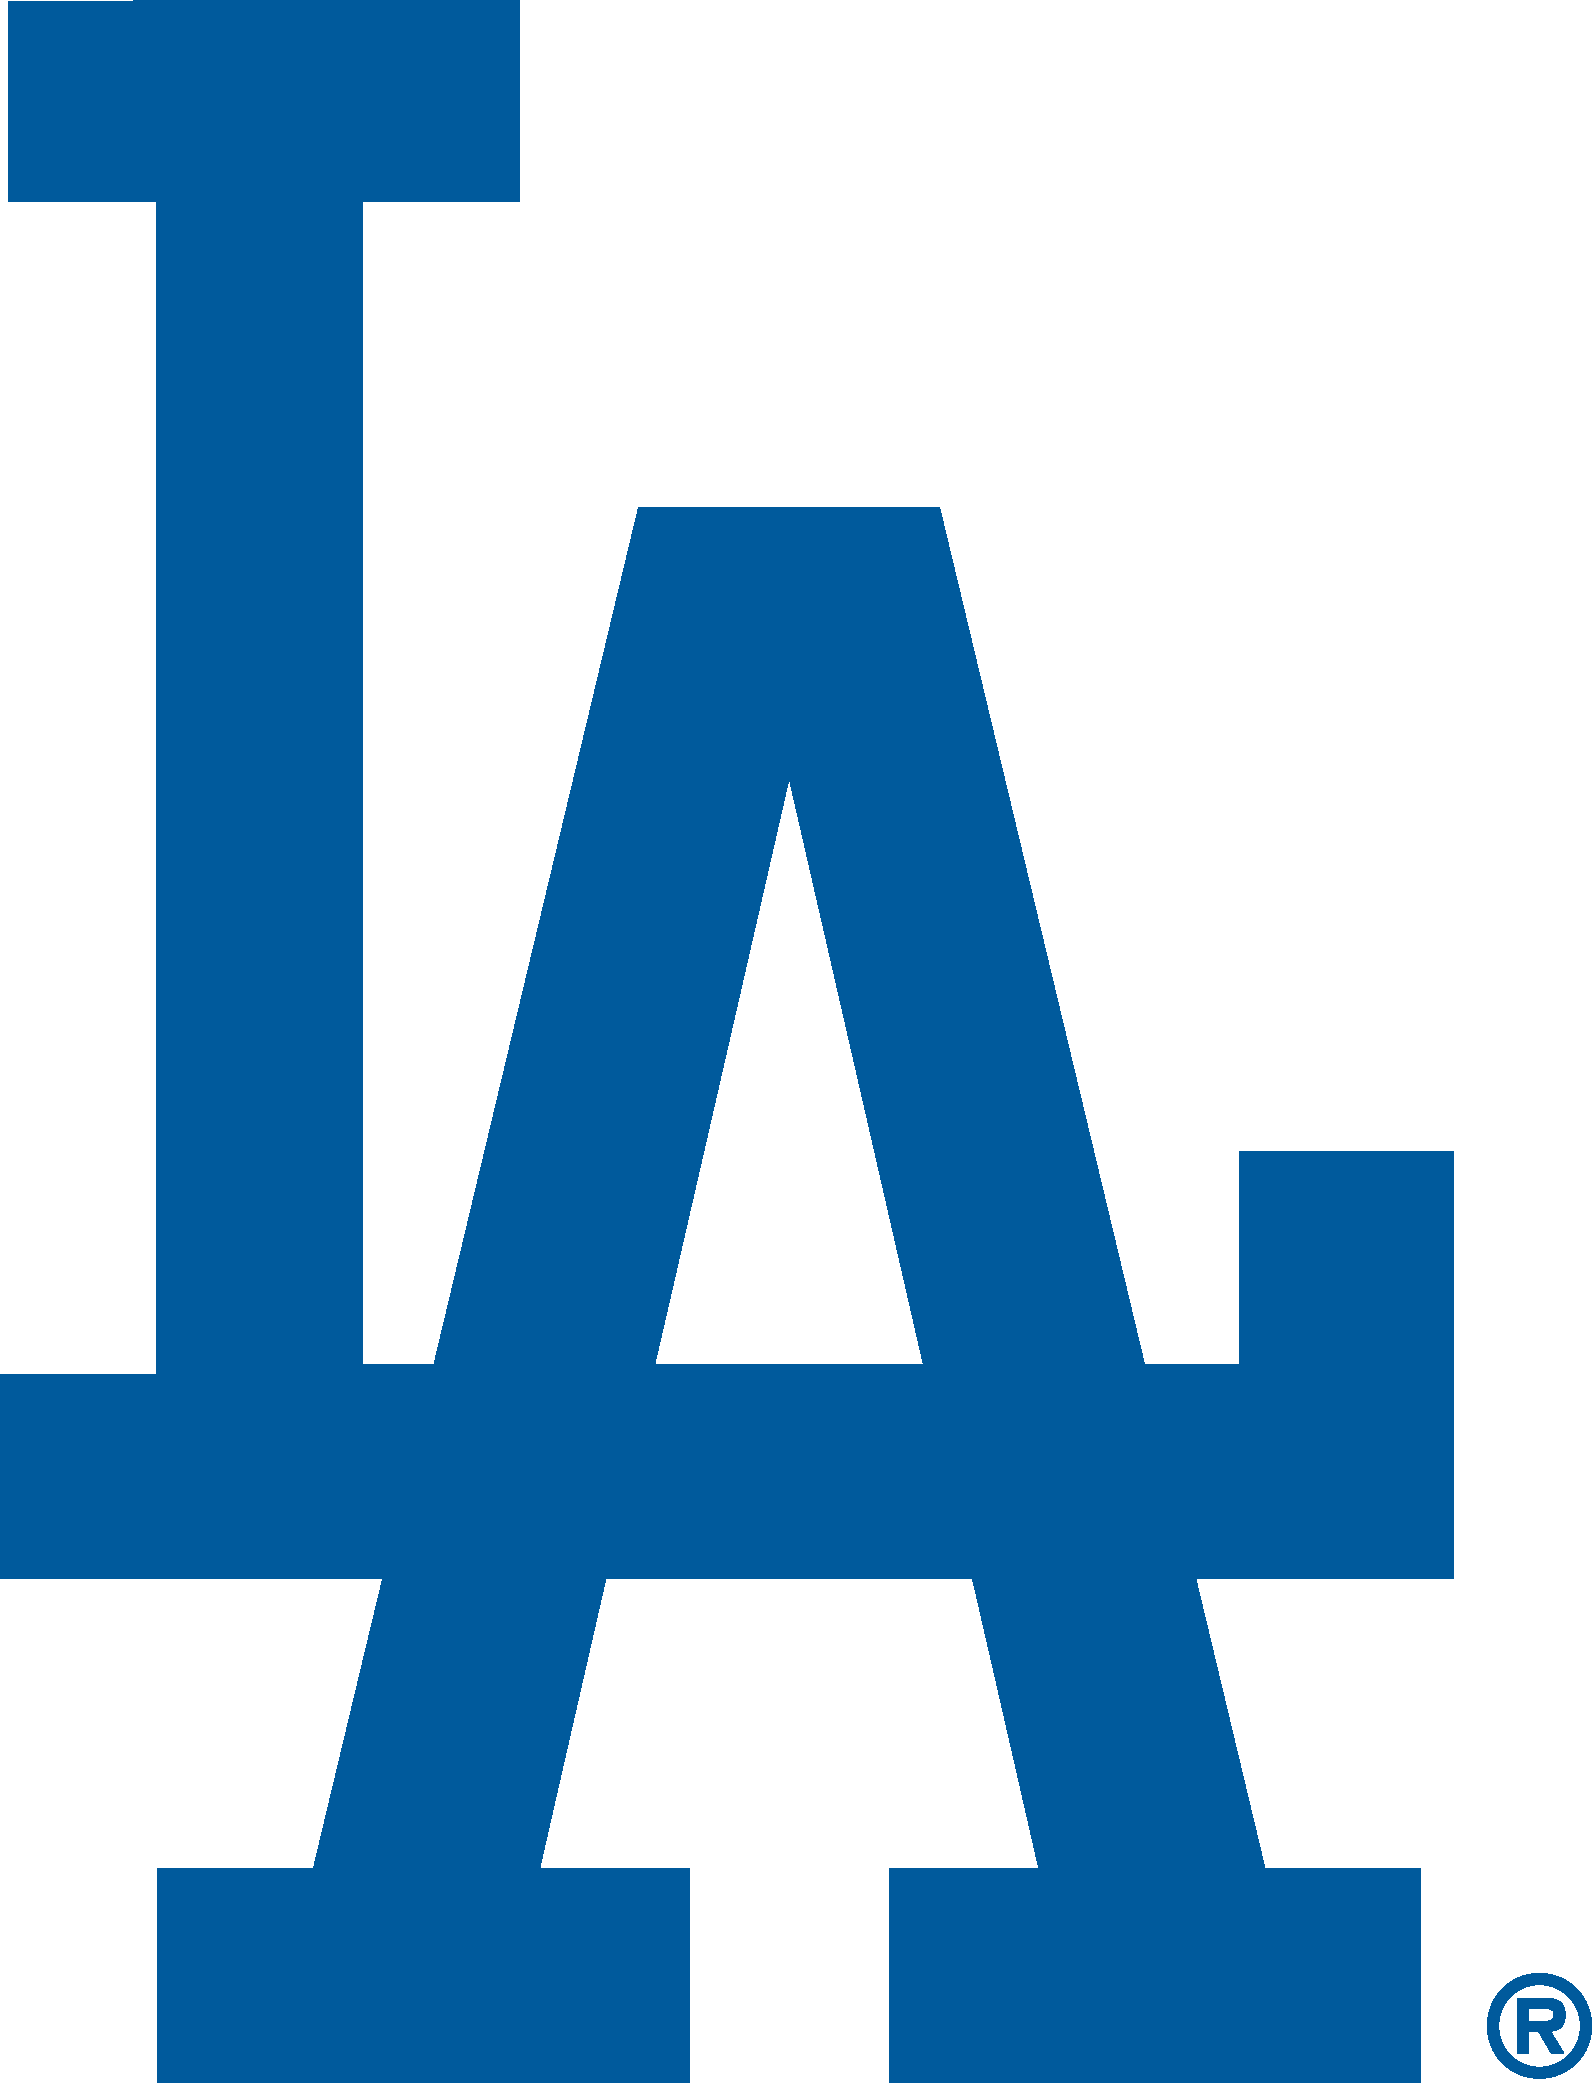 Los Angeles Dodgers Logo Download Vector.